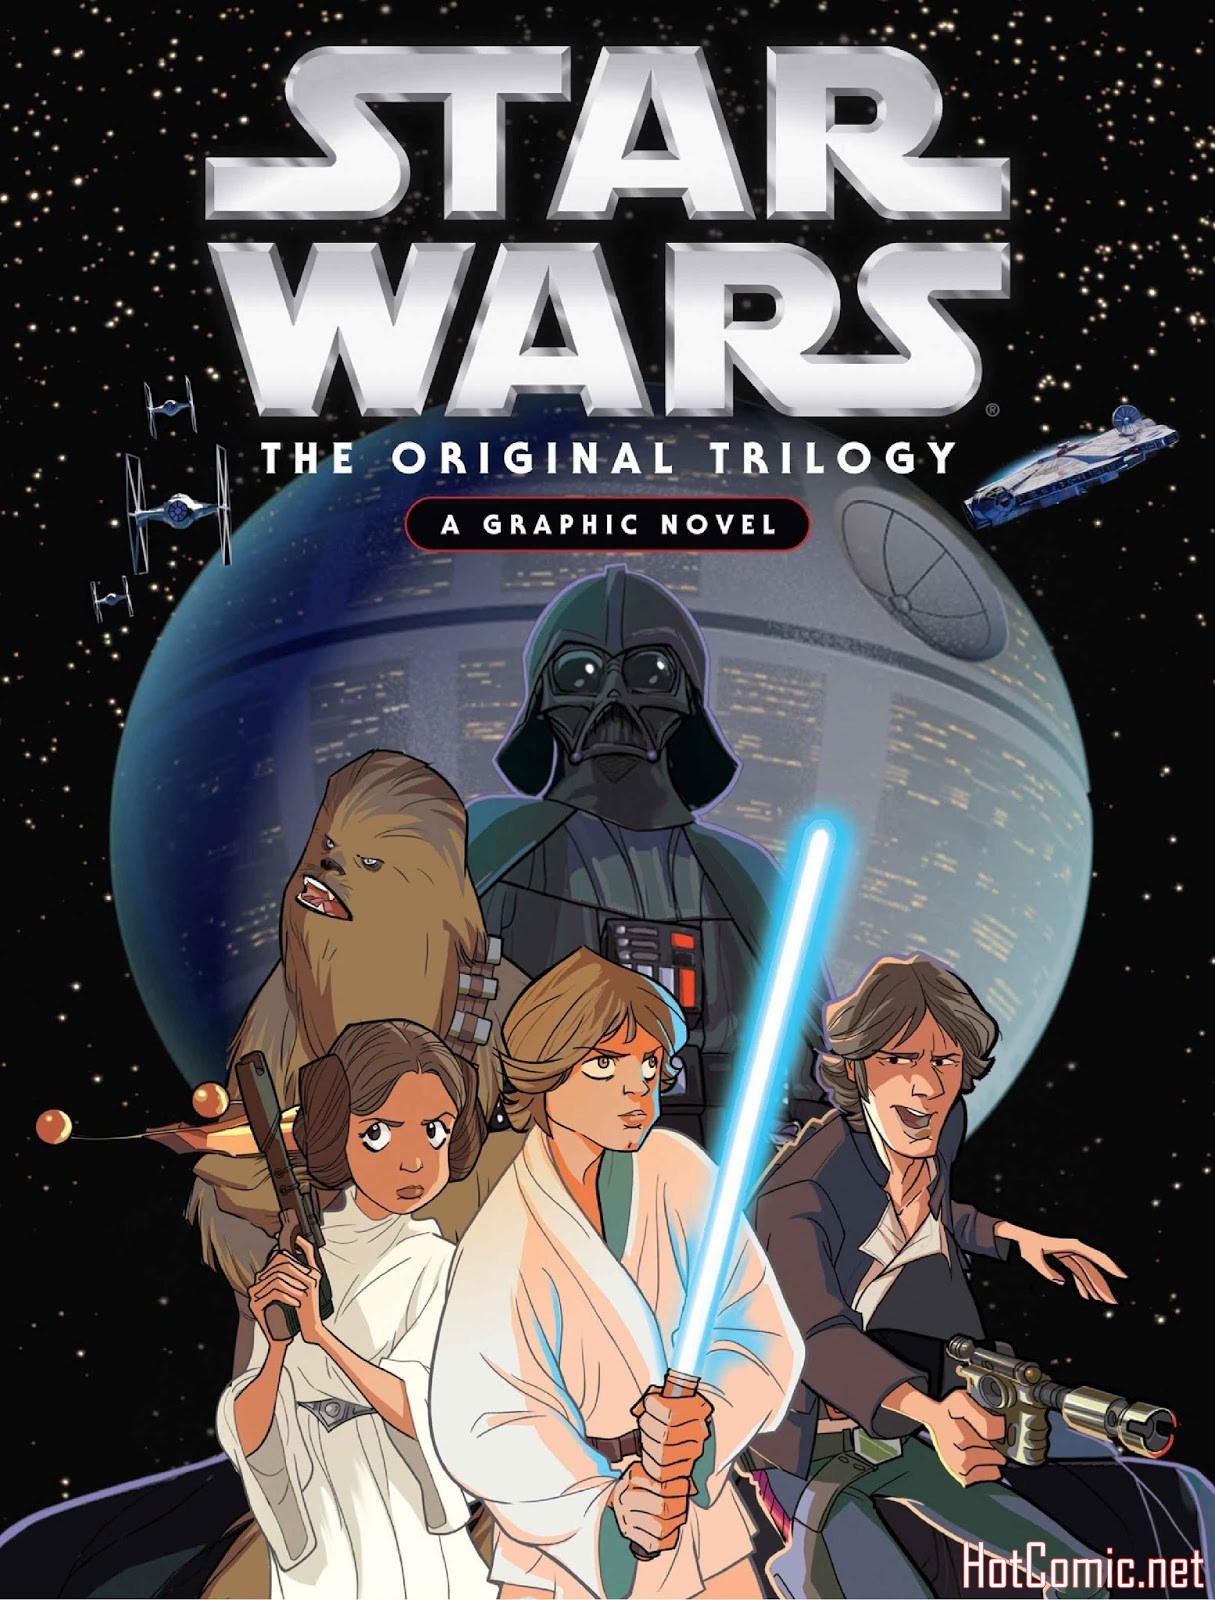 Star Wars: The Original Trilogy